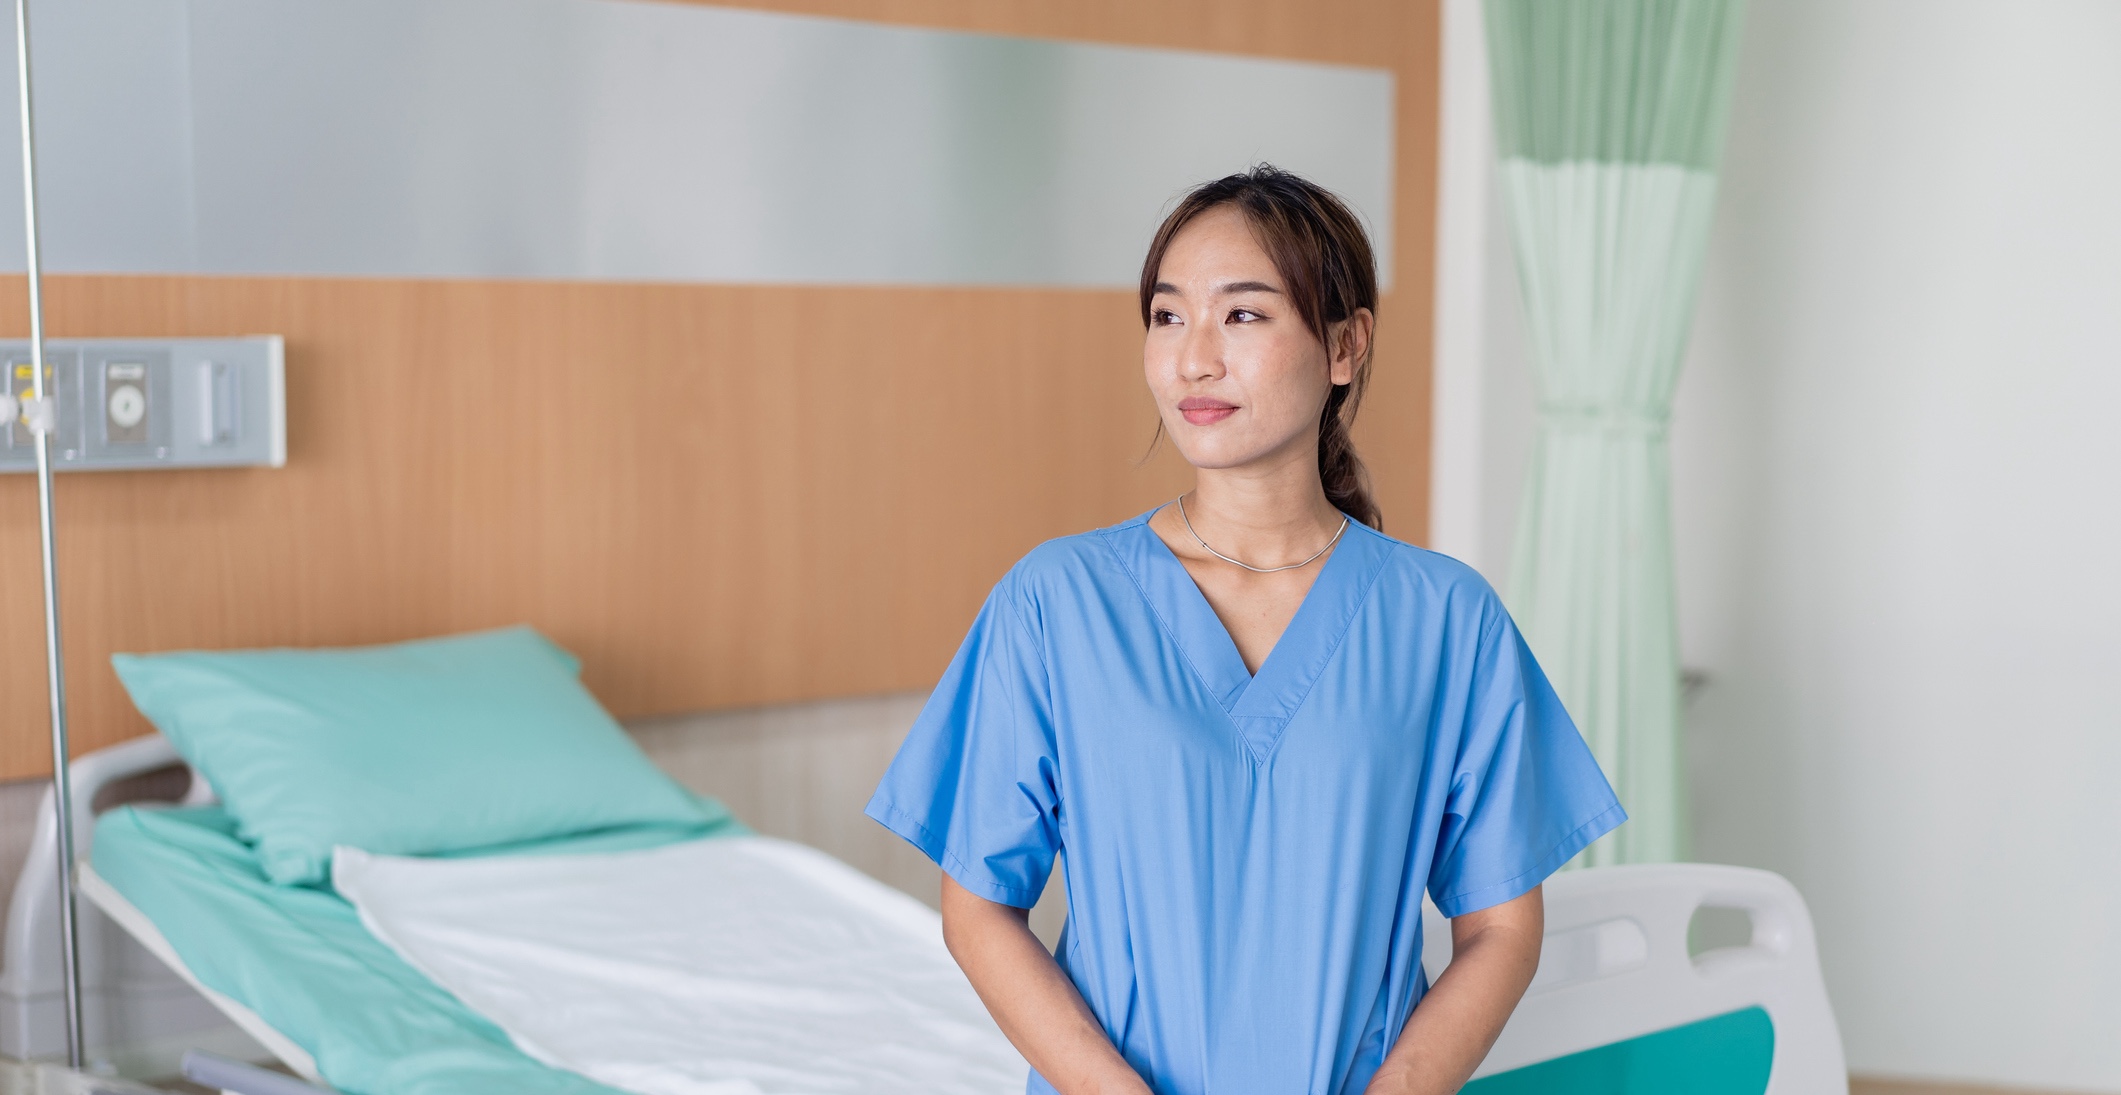 Nurse standing in empty hospital room